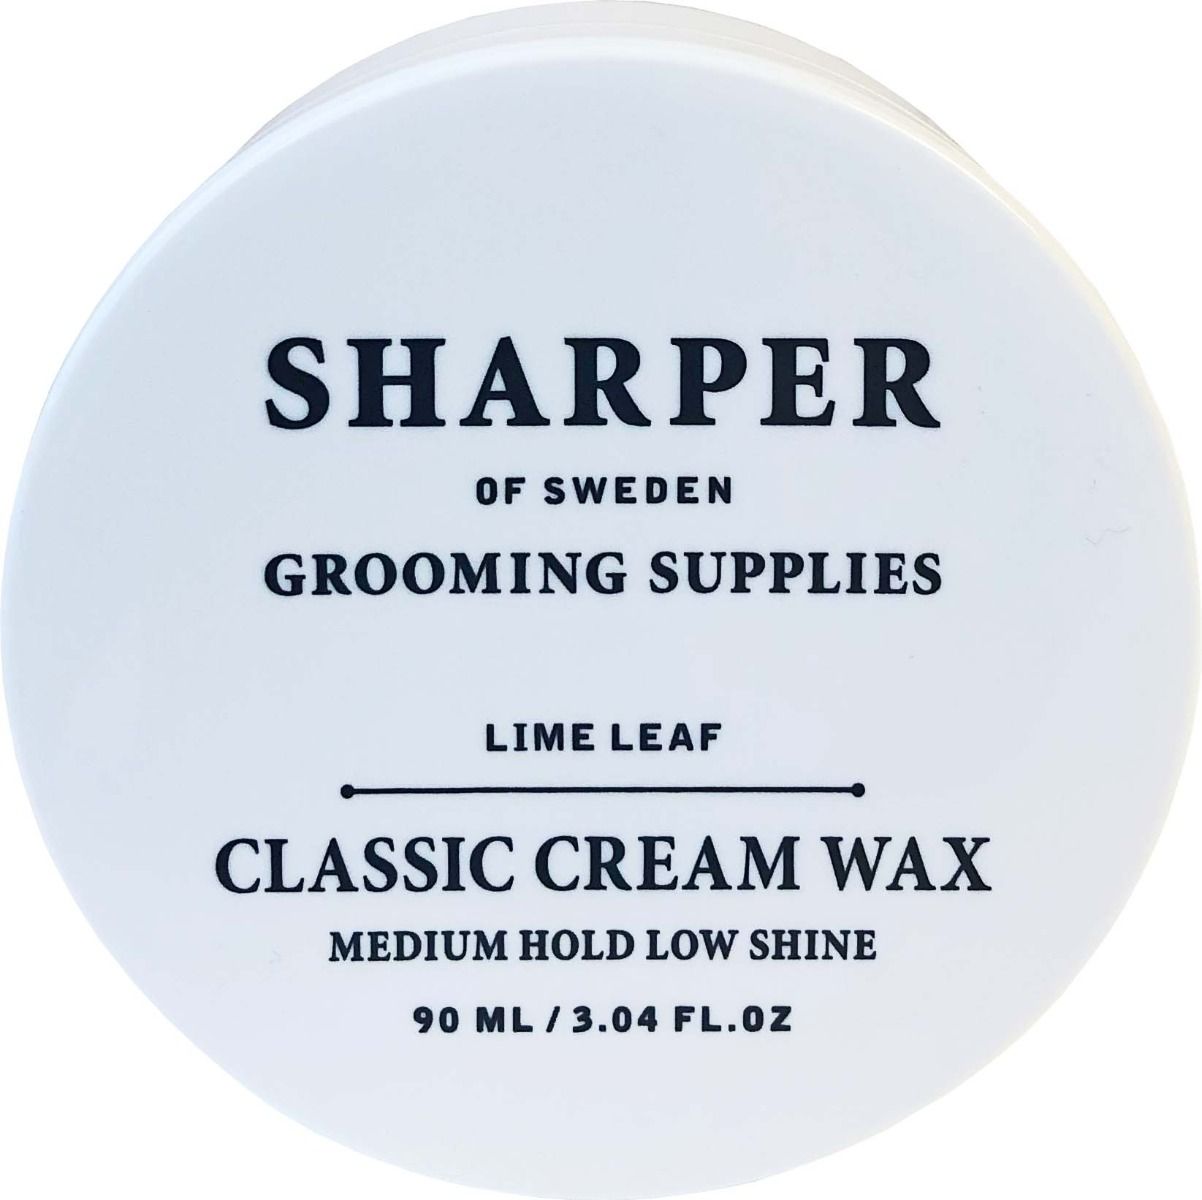 Sharper of Sweden Classic Cream Wax Lime Leaf 90ml